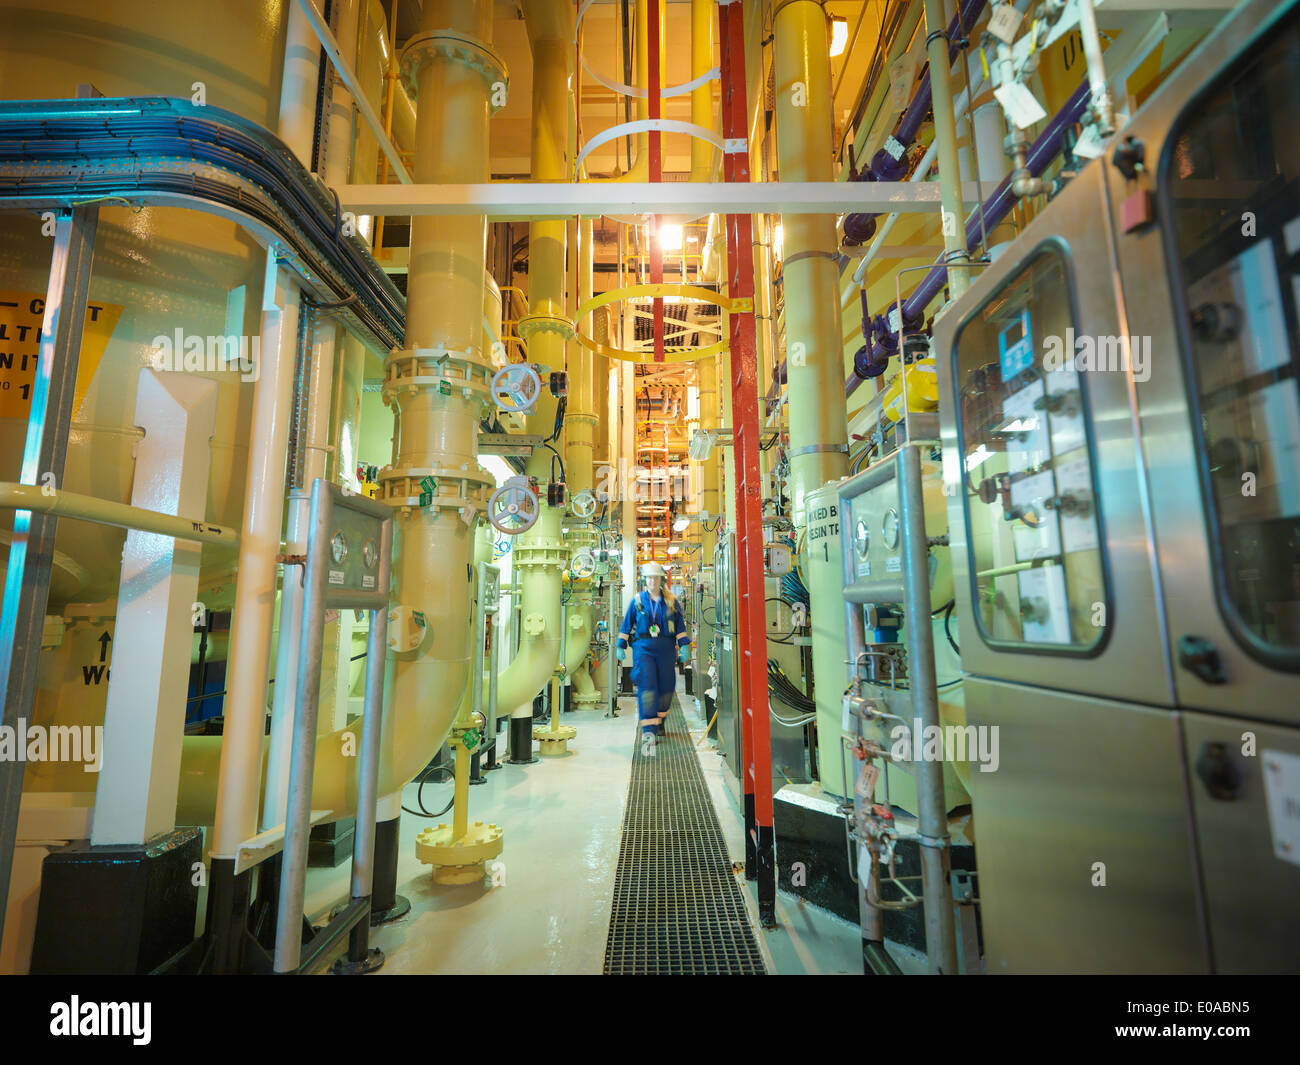 Female chemist walking amongst the pipework in power station Stock Photo